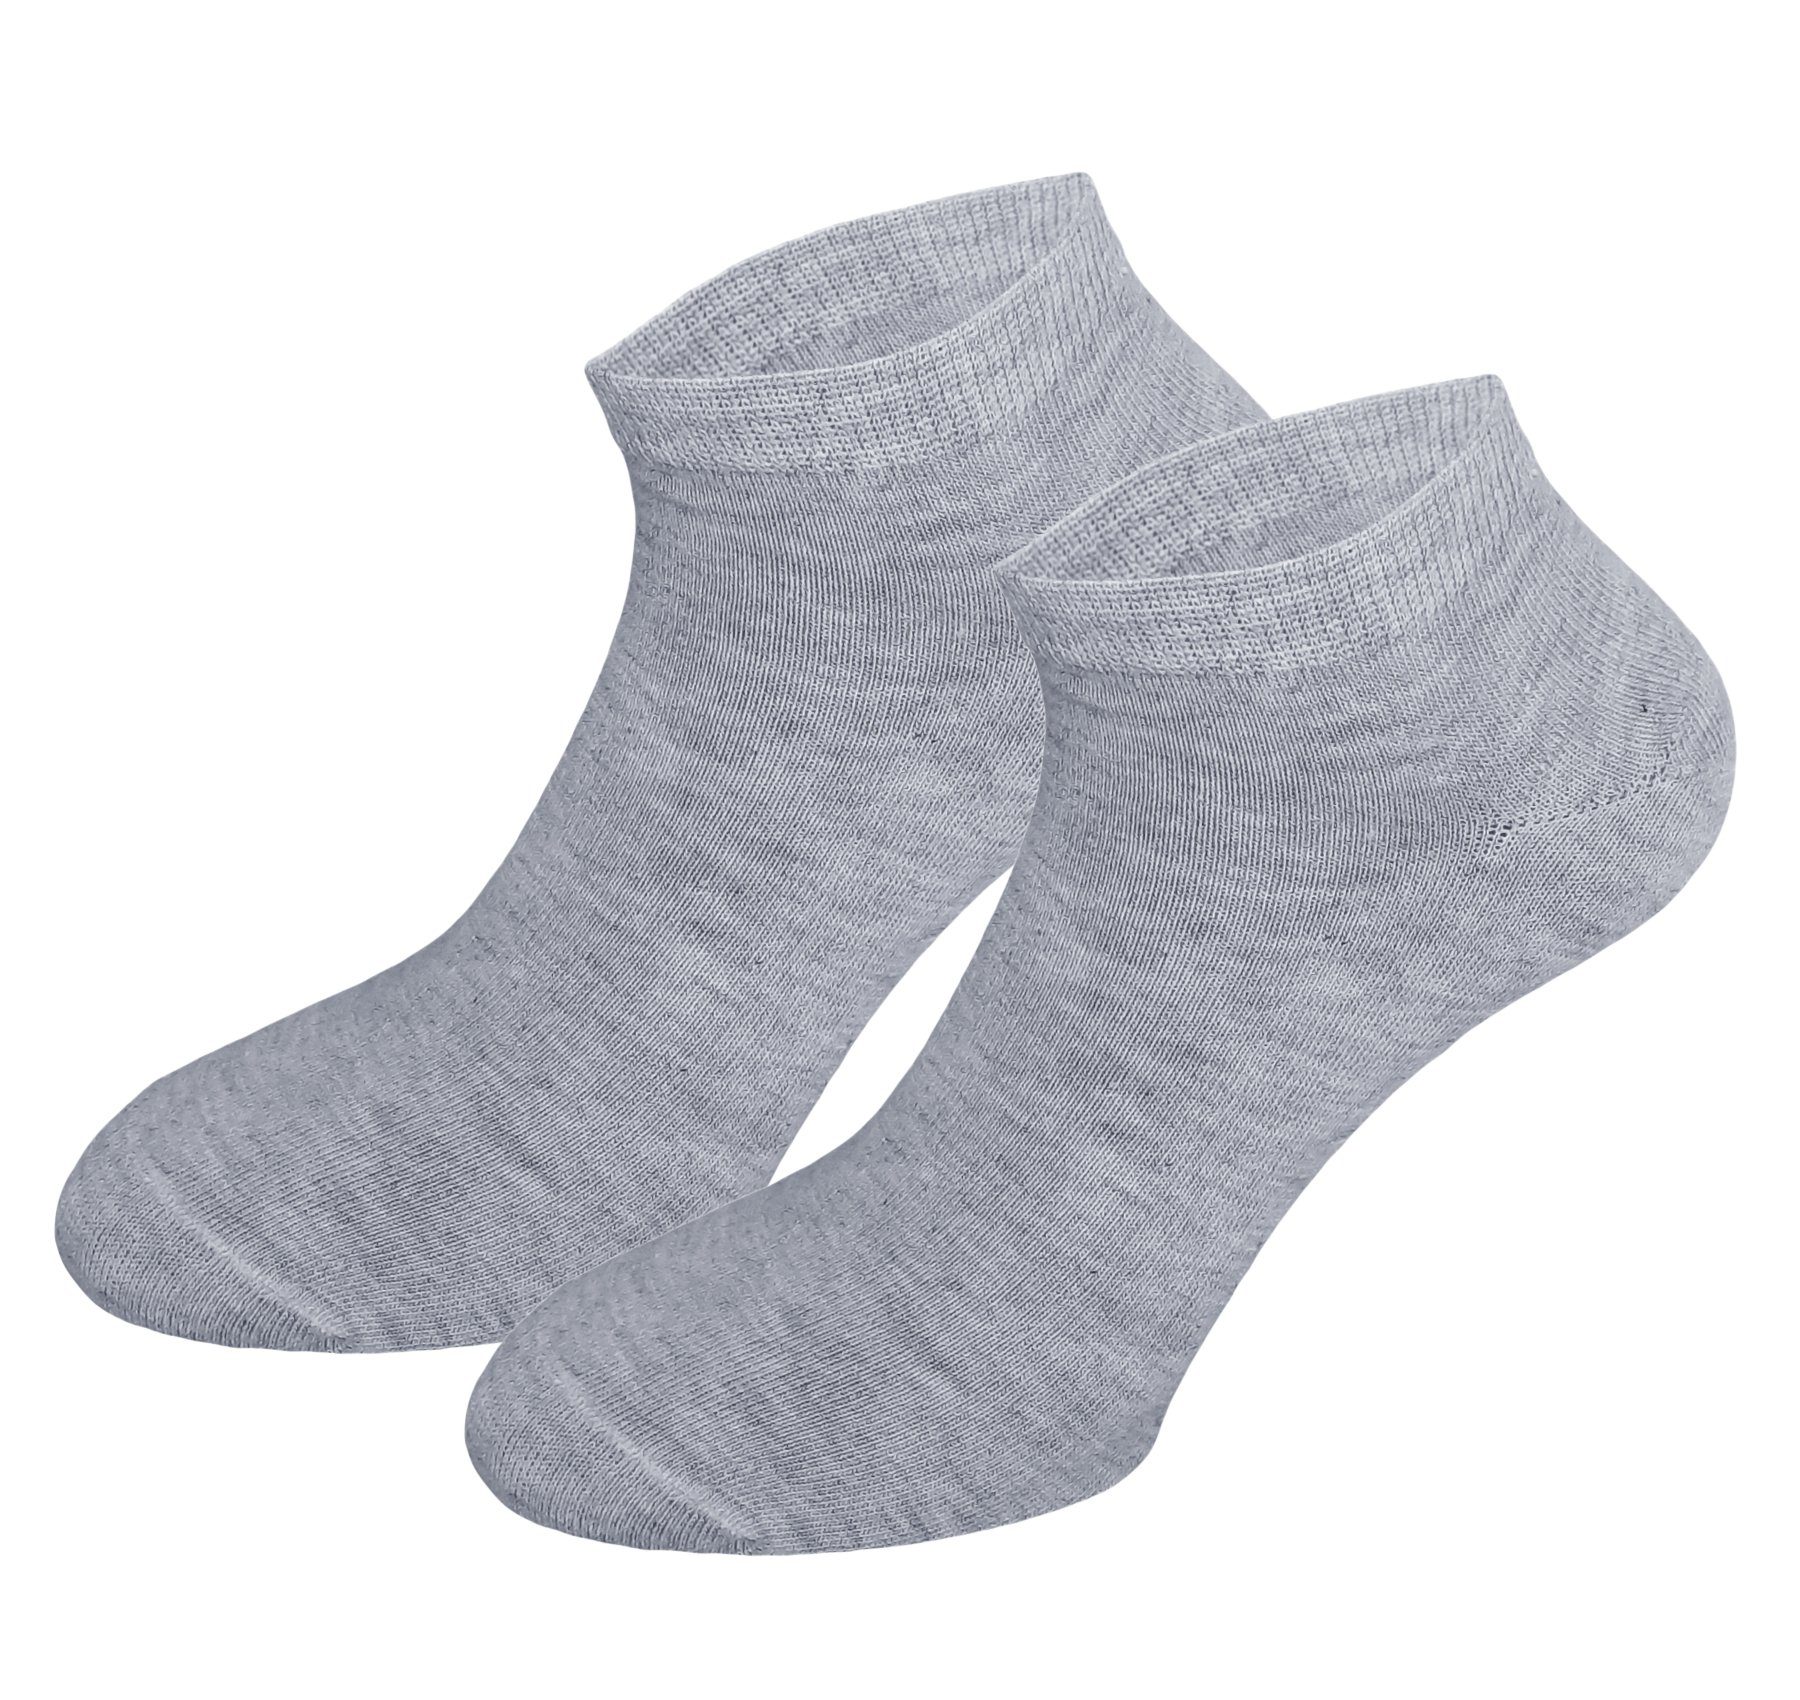 Sneakersocken kurze Naht Sportsocken (Schwarz/Grau) maschinengekettelte Socken Sockenhimmel (sehr leichte Mix Basic Paar) Sommersocken für Farben (10 in Damen flach)